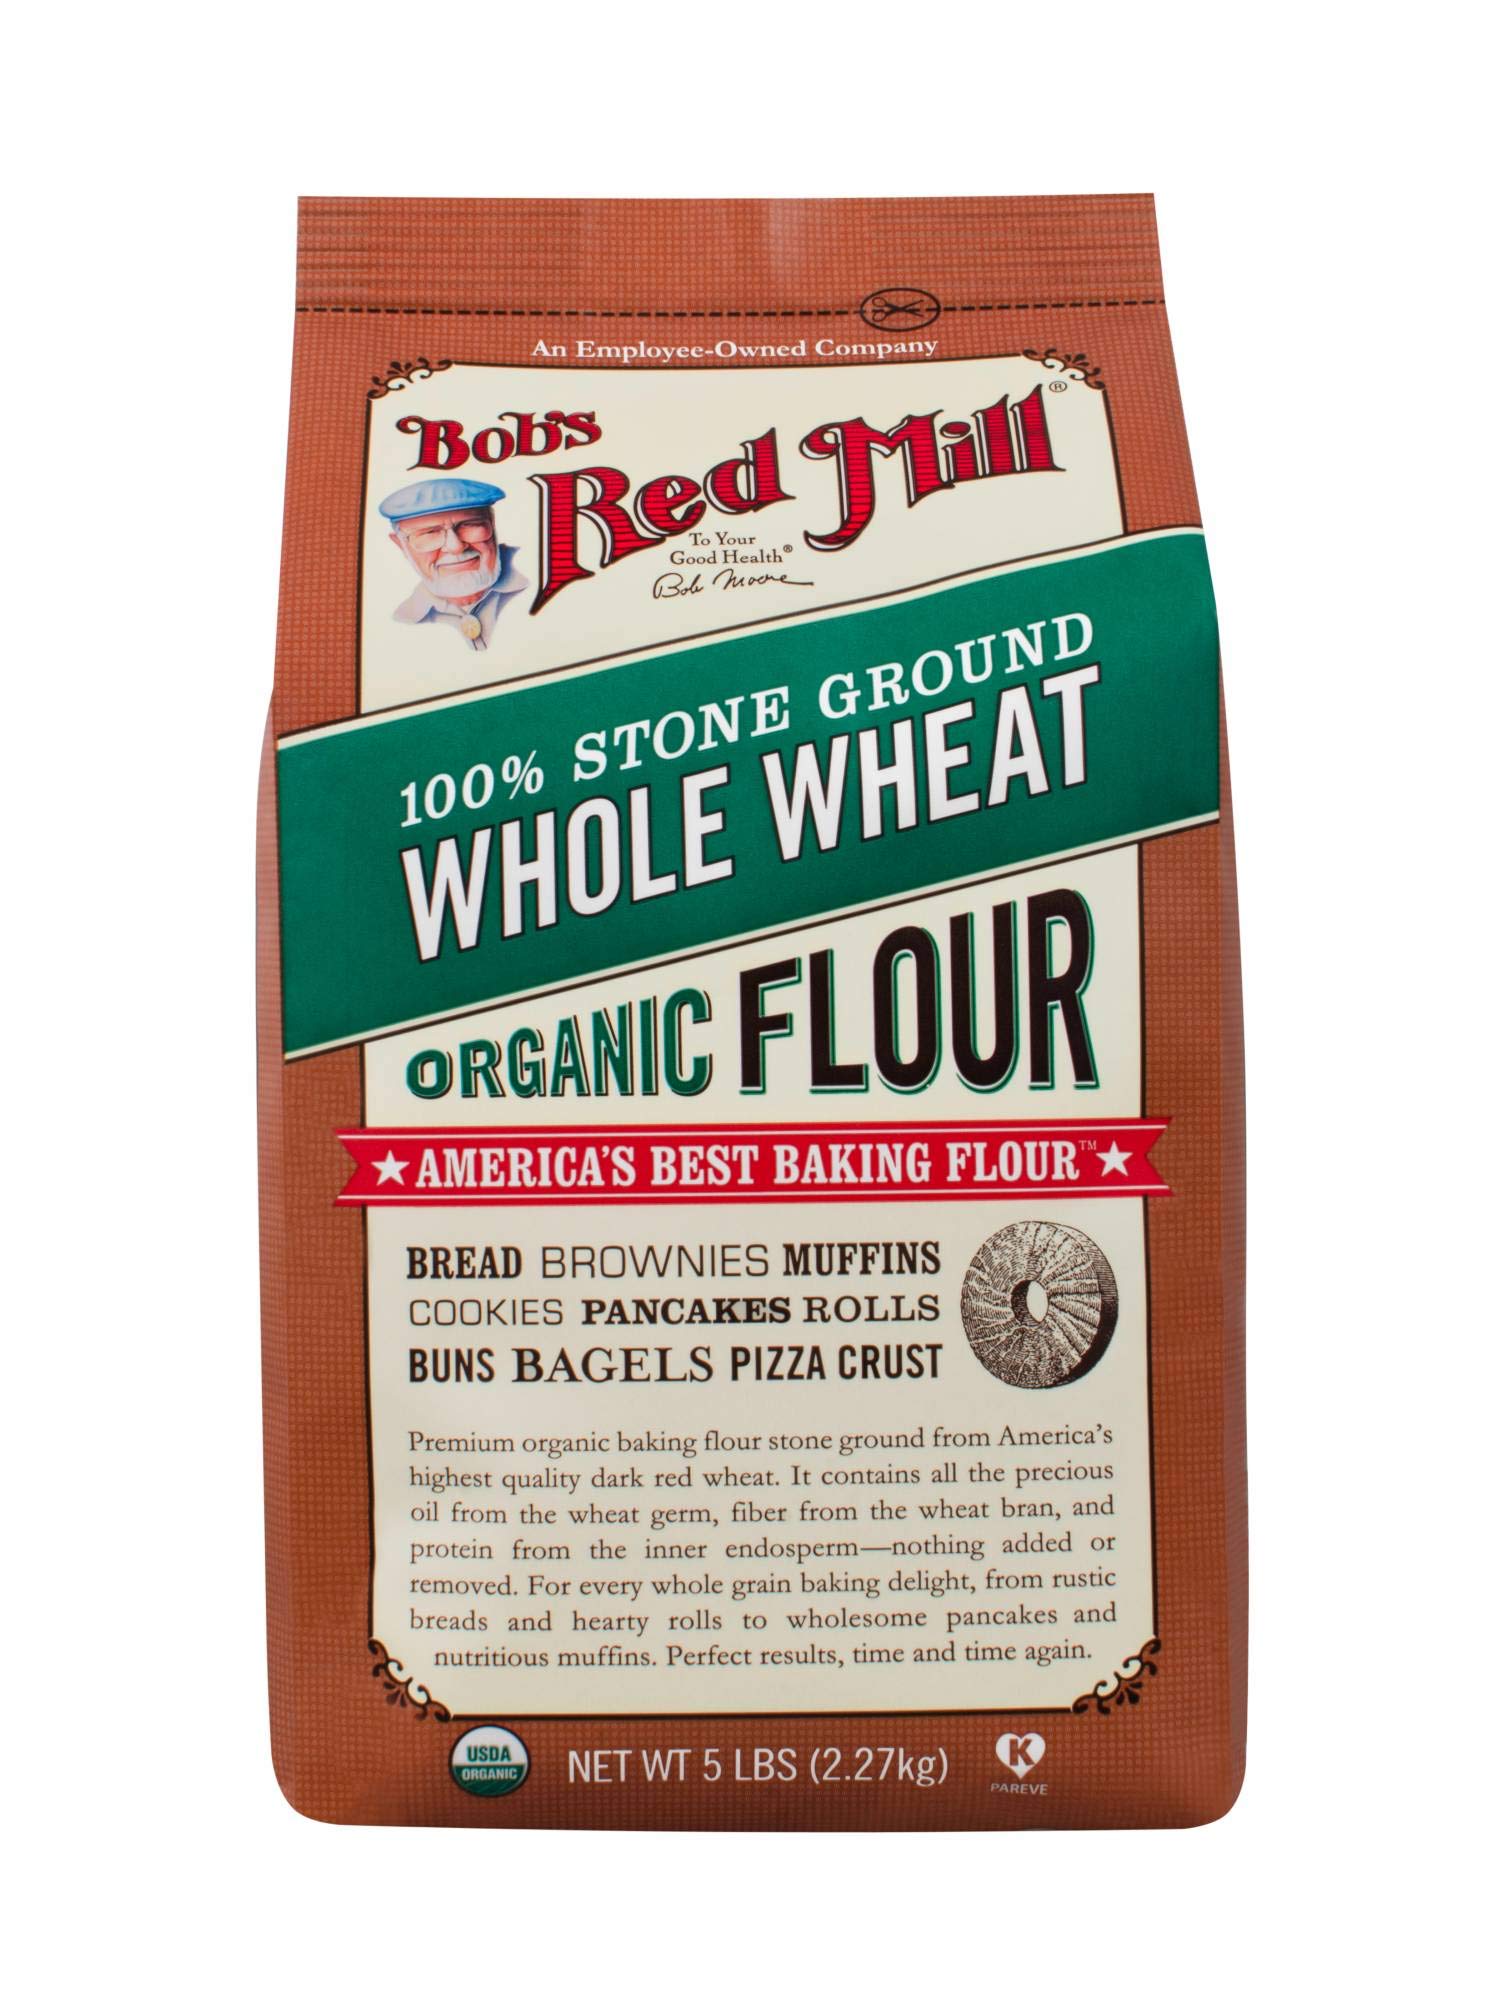 BOB'S RED MILL 100% Stone Ground Whole Wheat Organic Flour, 2.27Kg